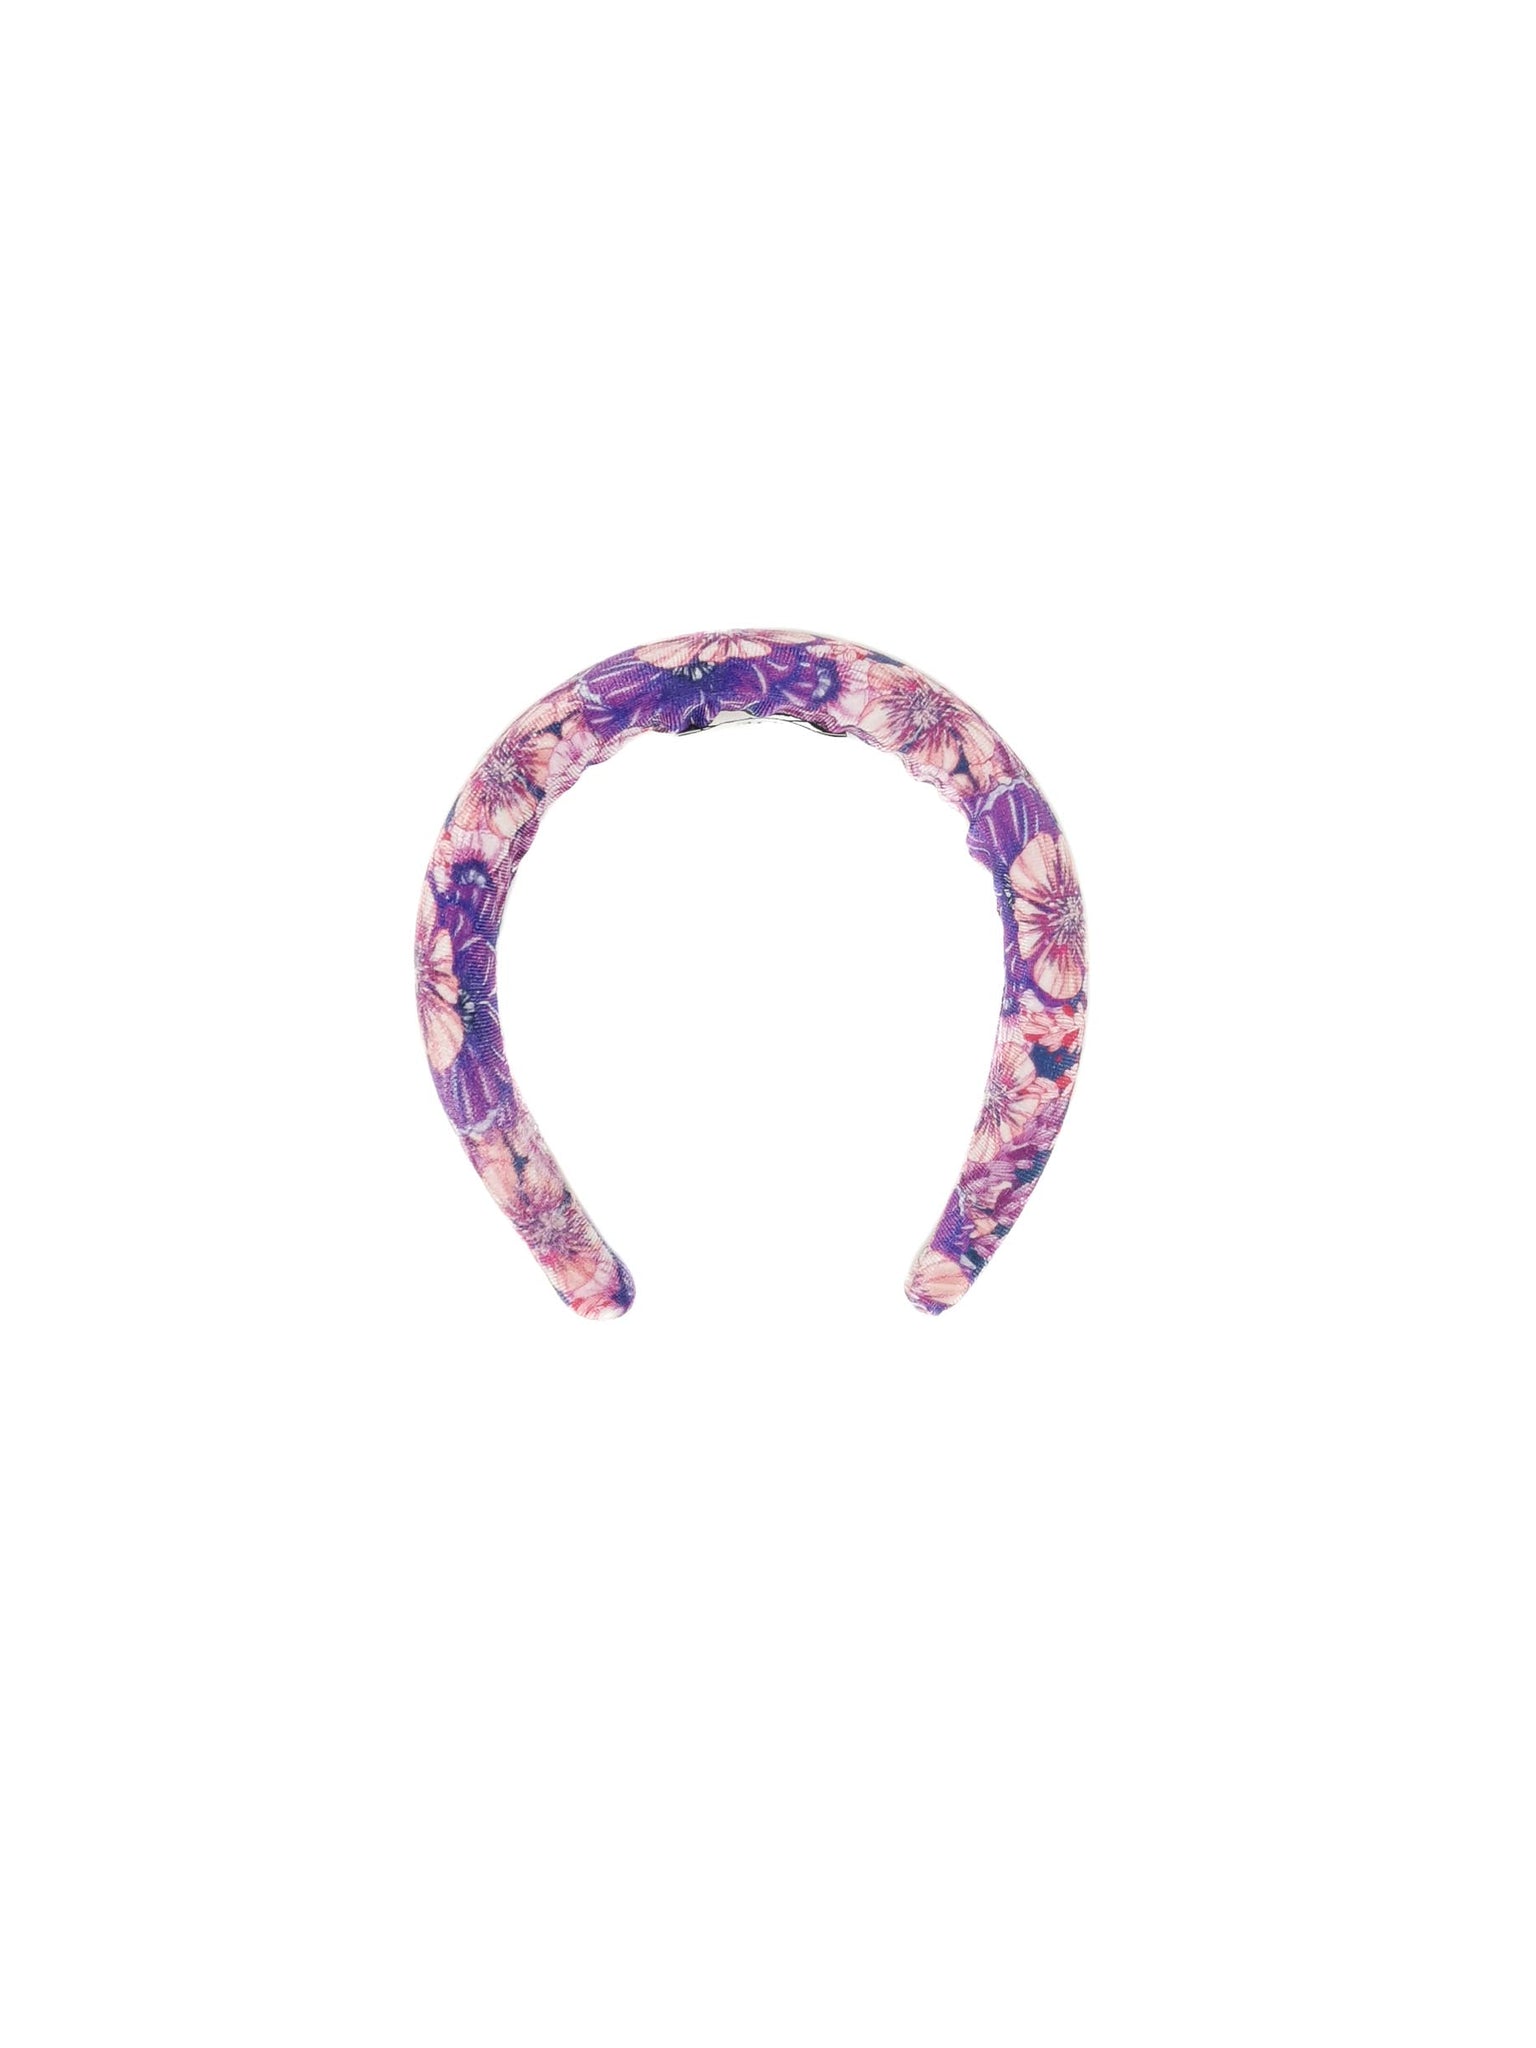 Fascia imbottita in velluto con motivo floreale viola